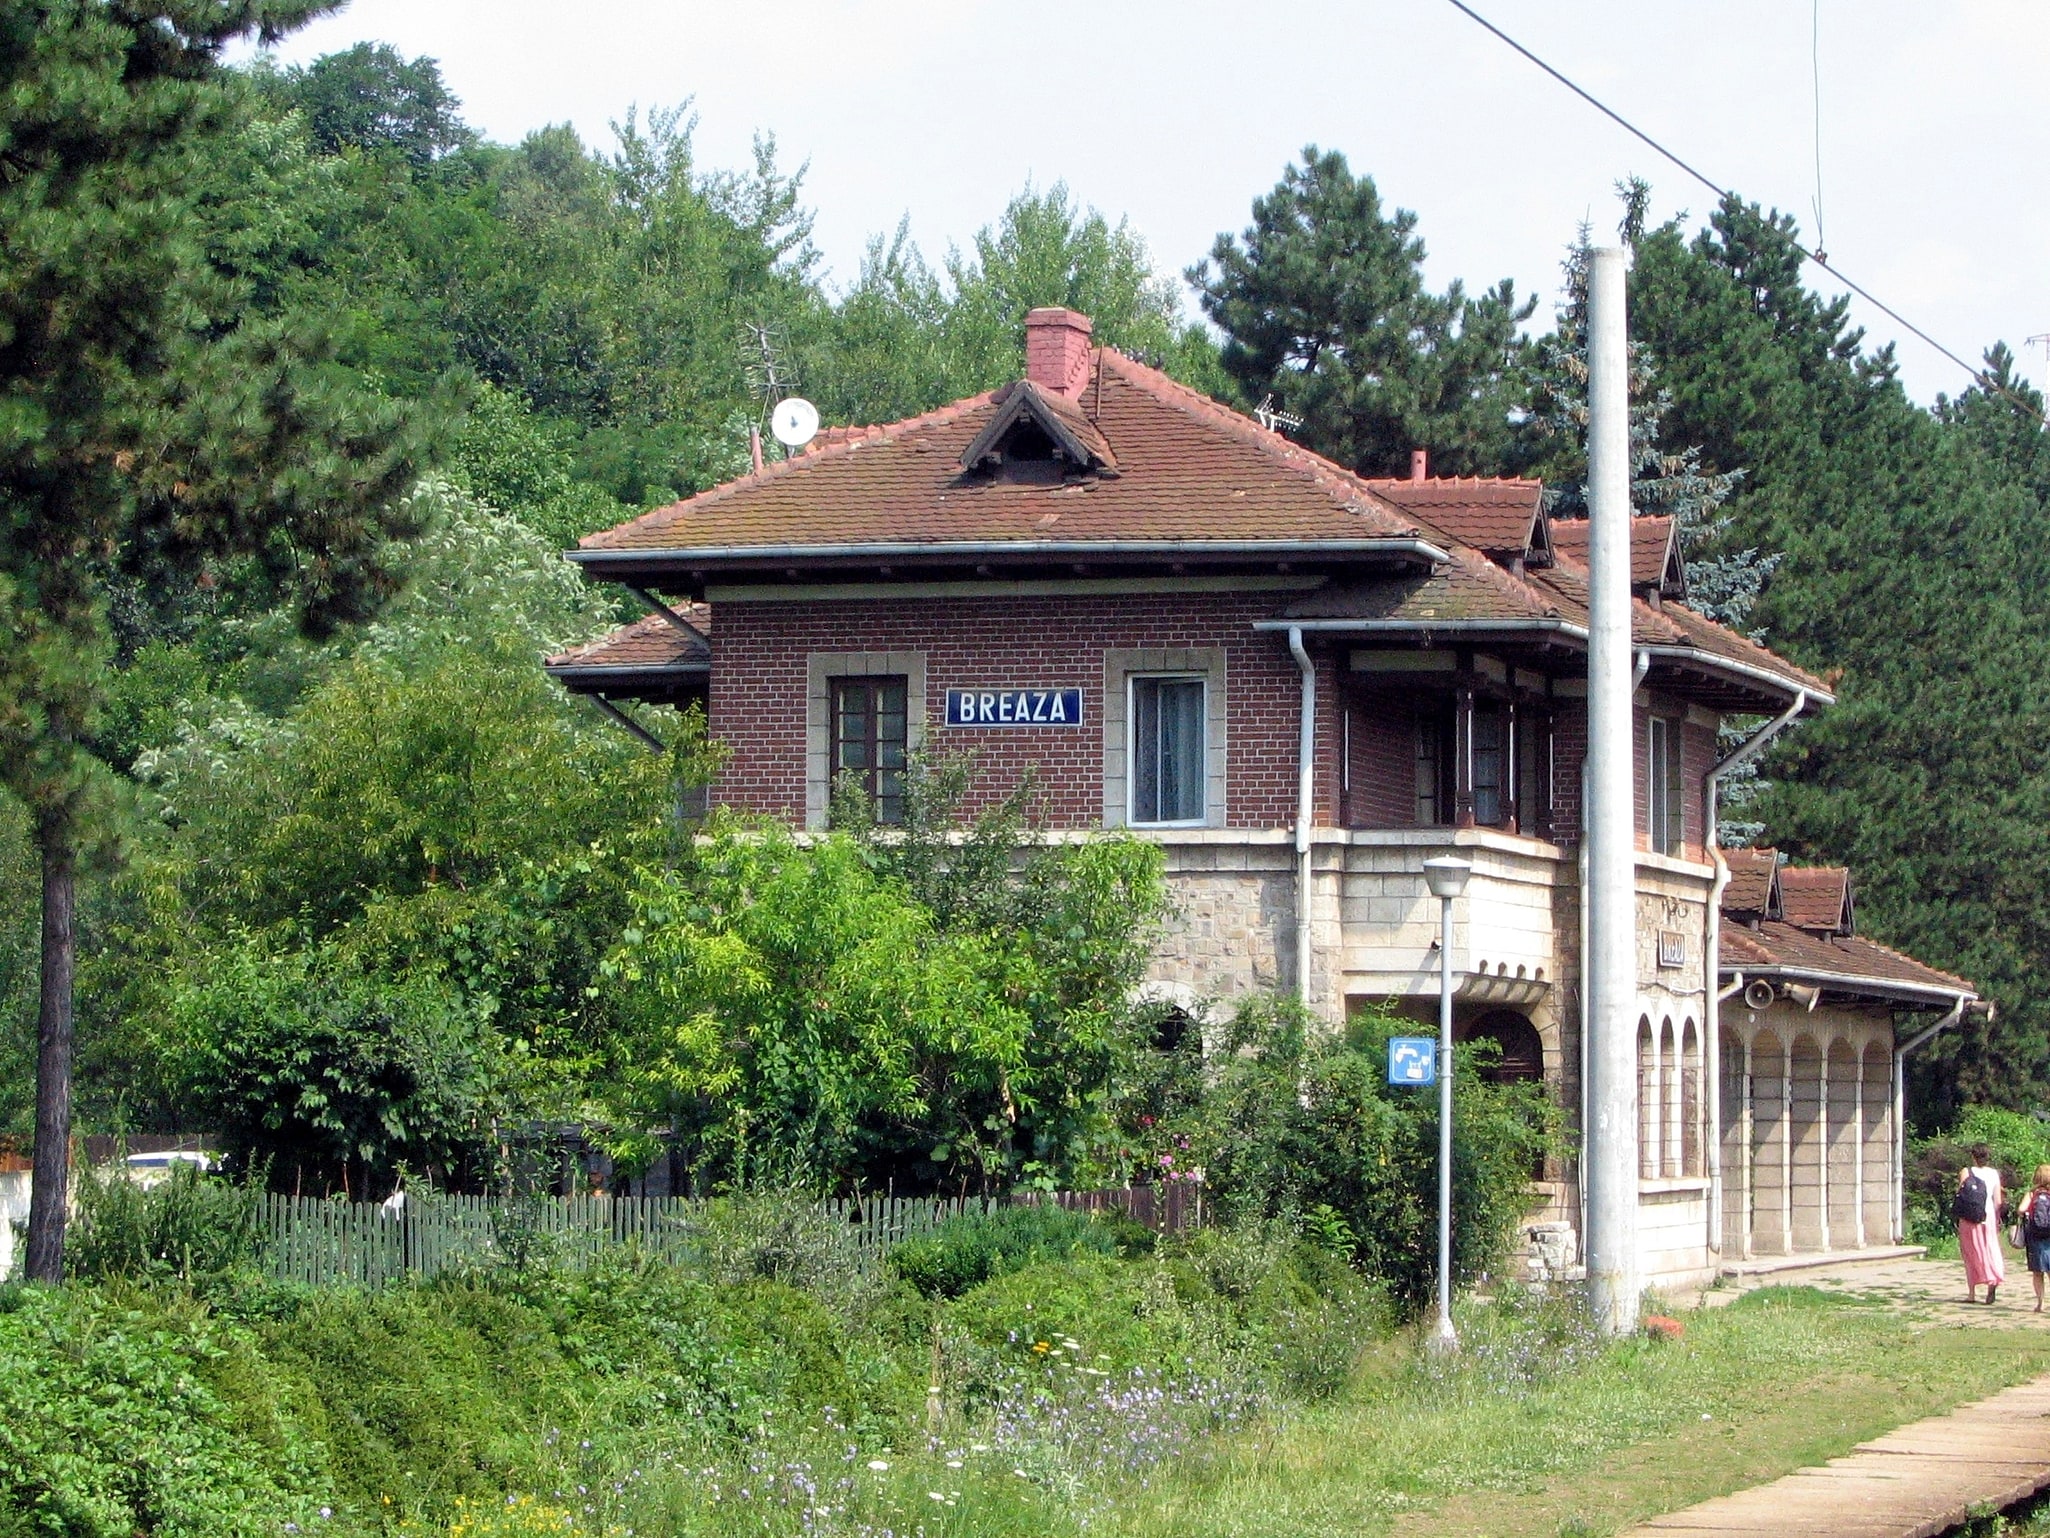 Breaza, Rumania